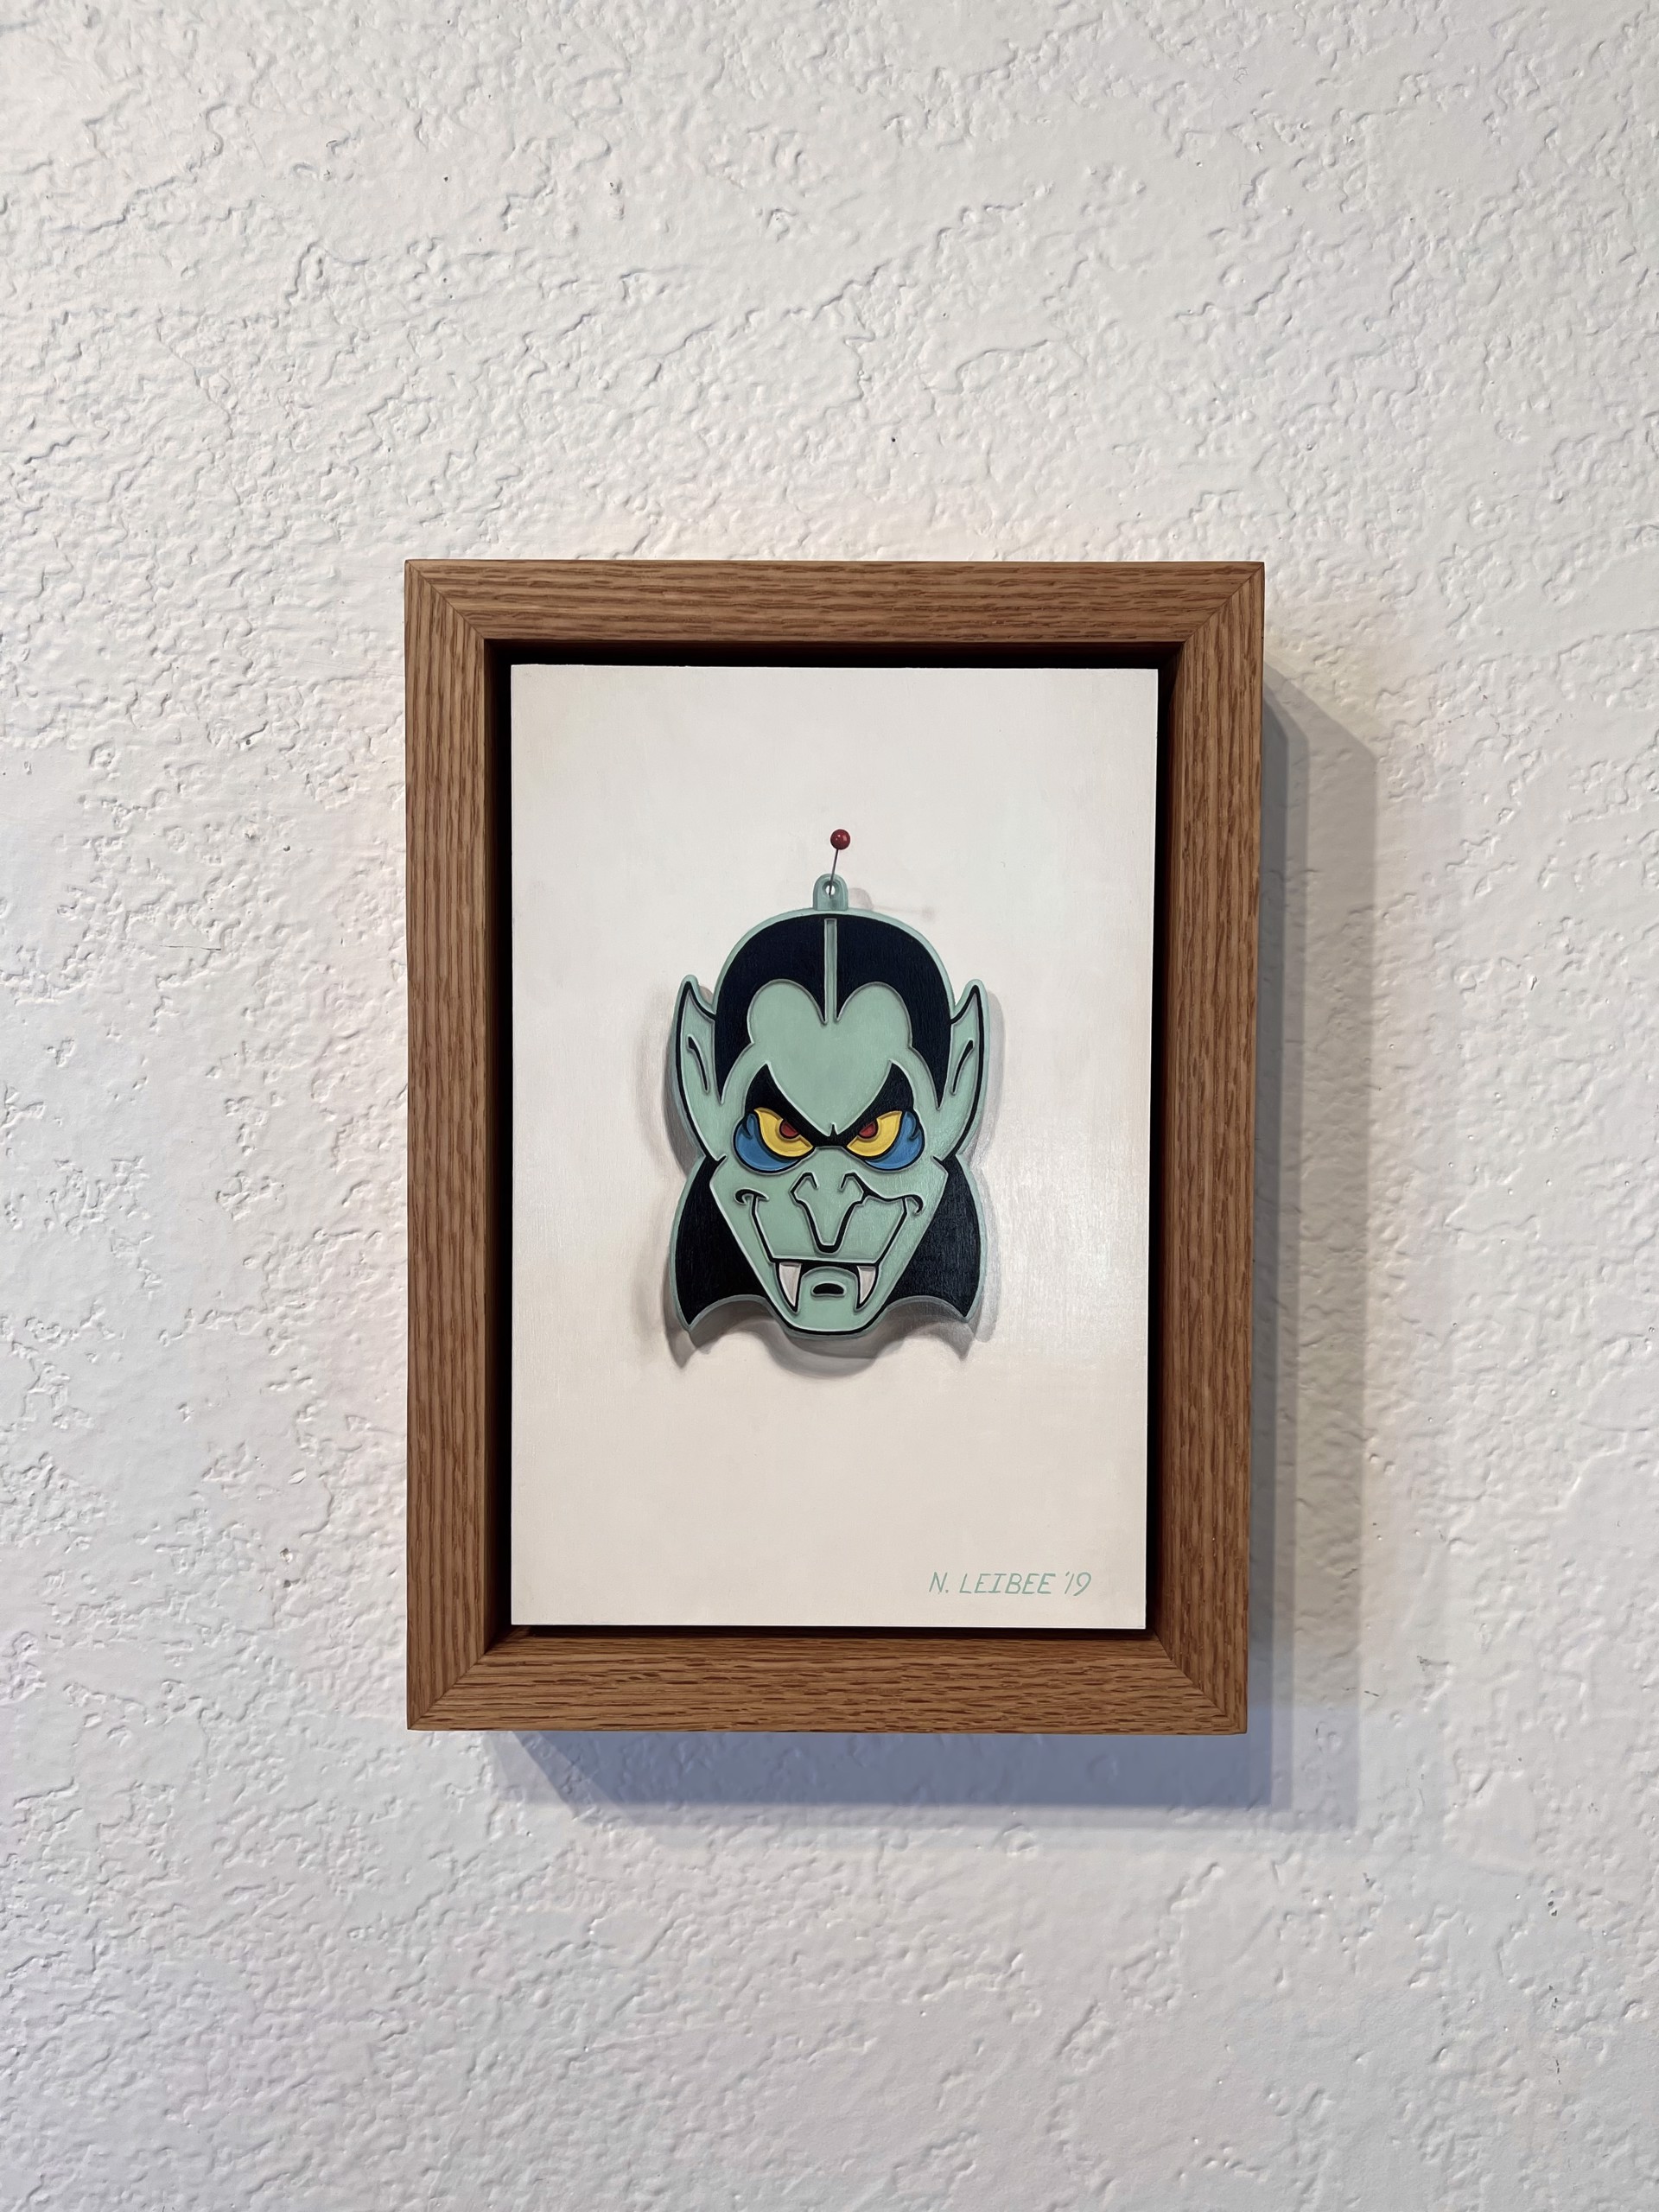 Dracula Pin by Nick Leibee